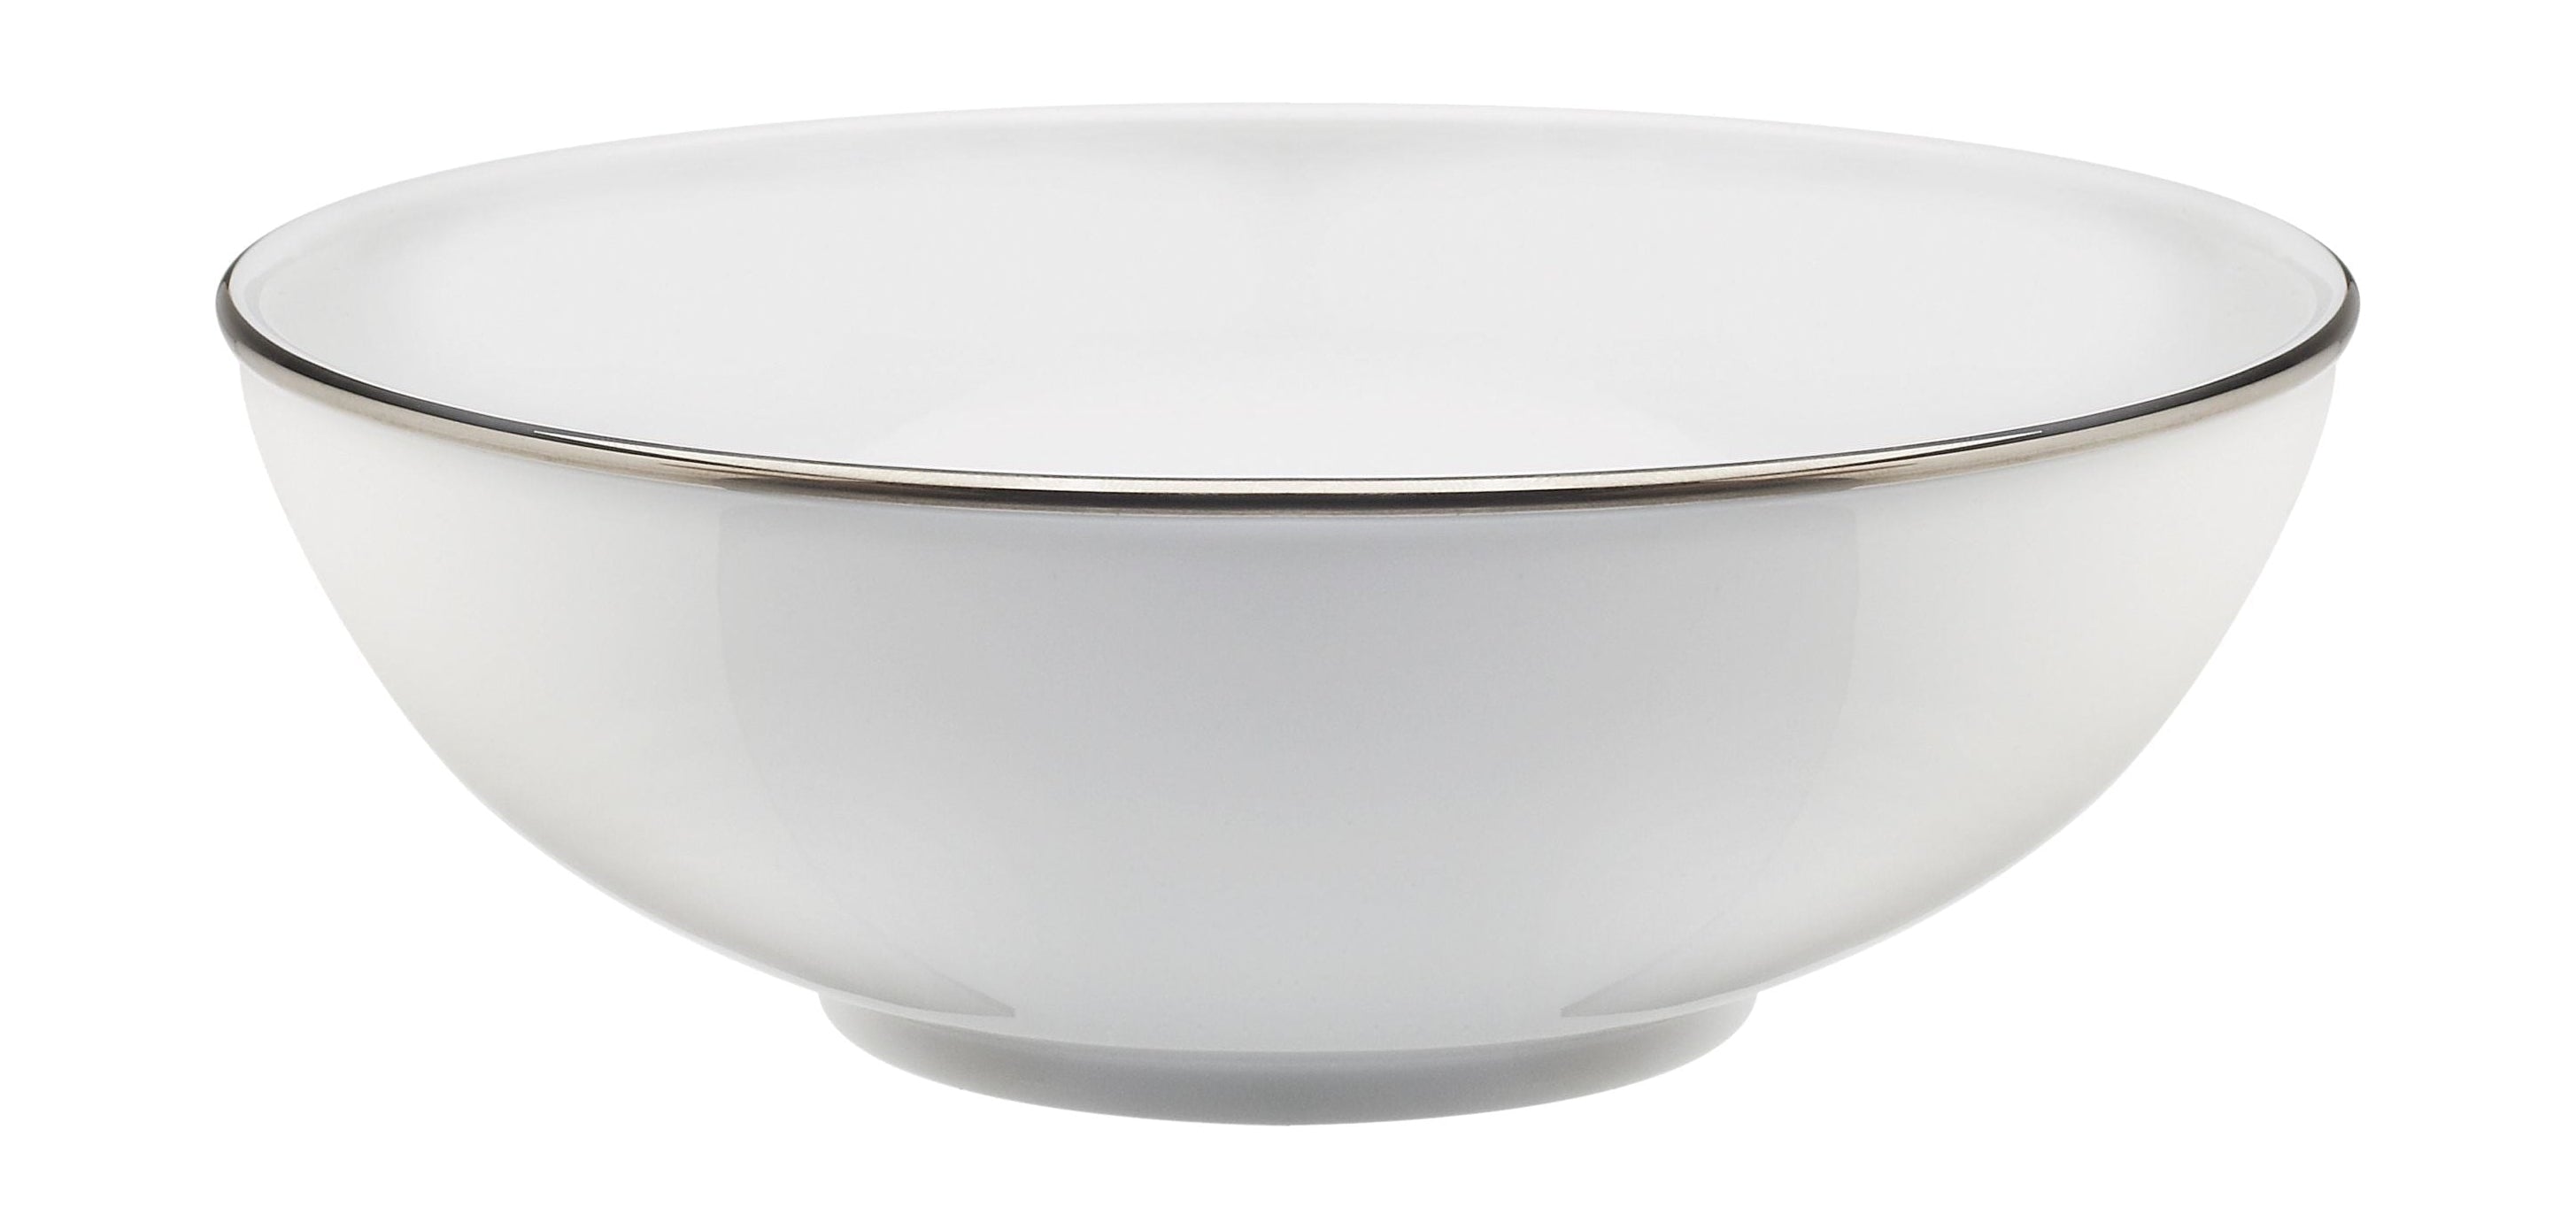 Rörstrand Corona Portch Bowl, 17 cm